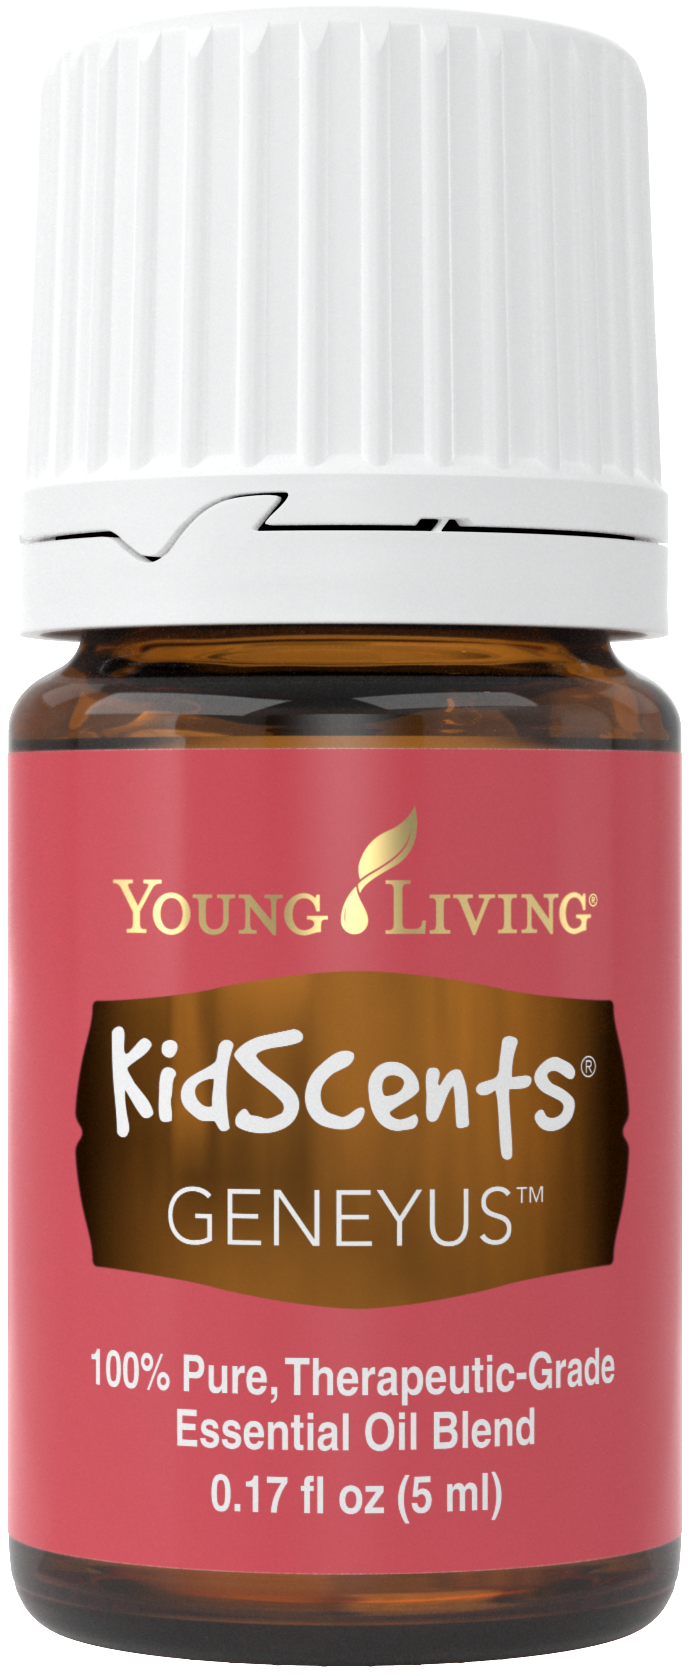 KidScents Geneyus 5ml Silo.png